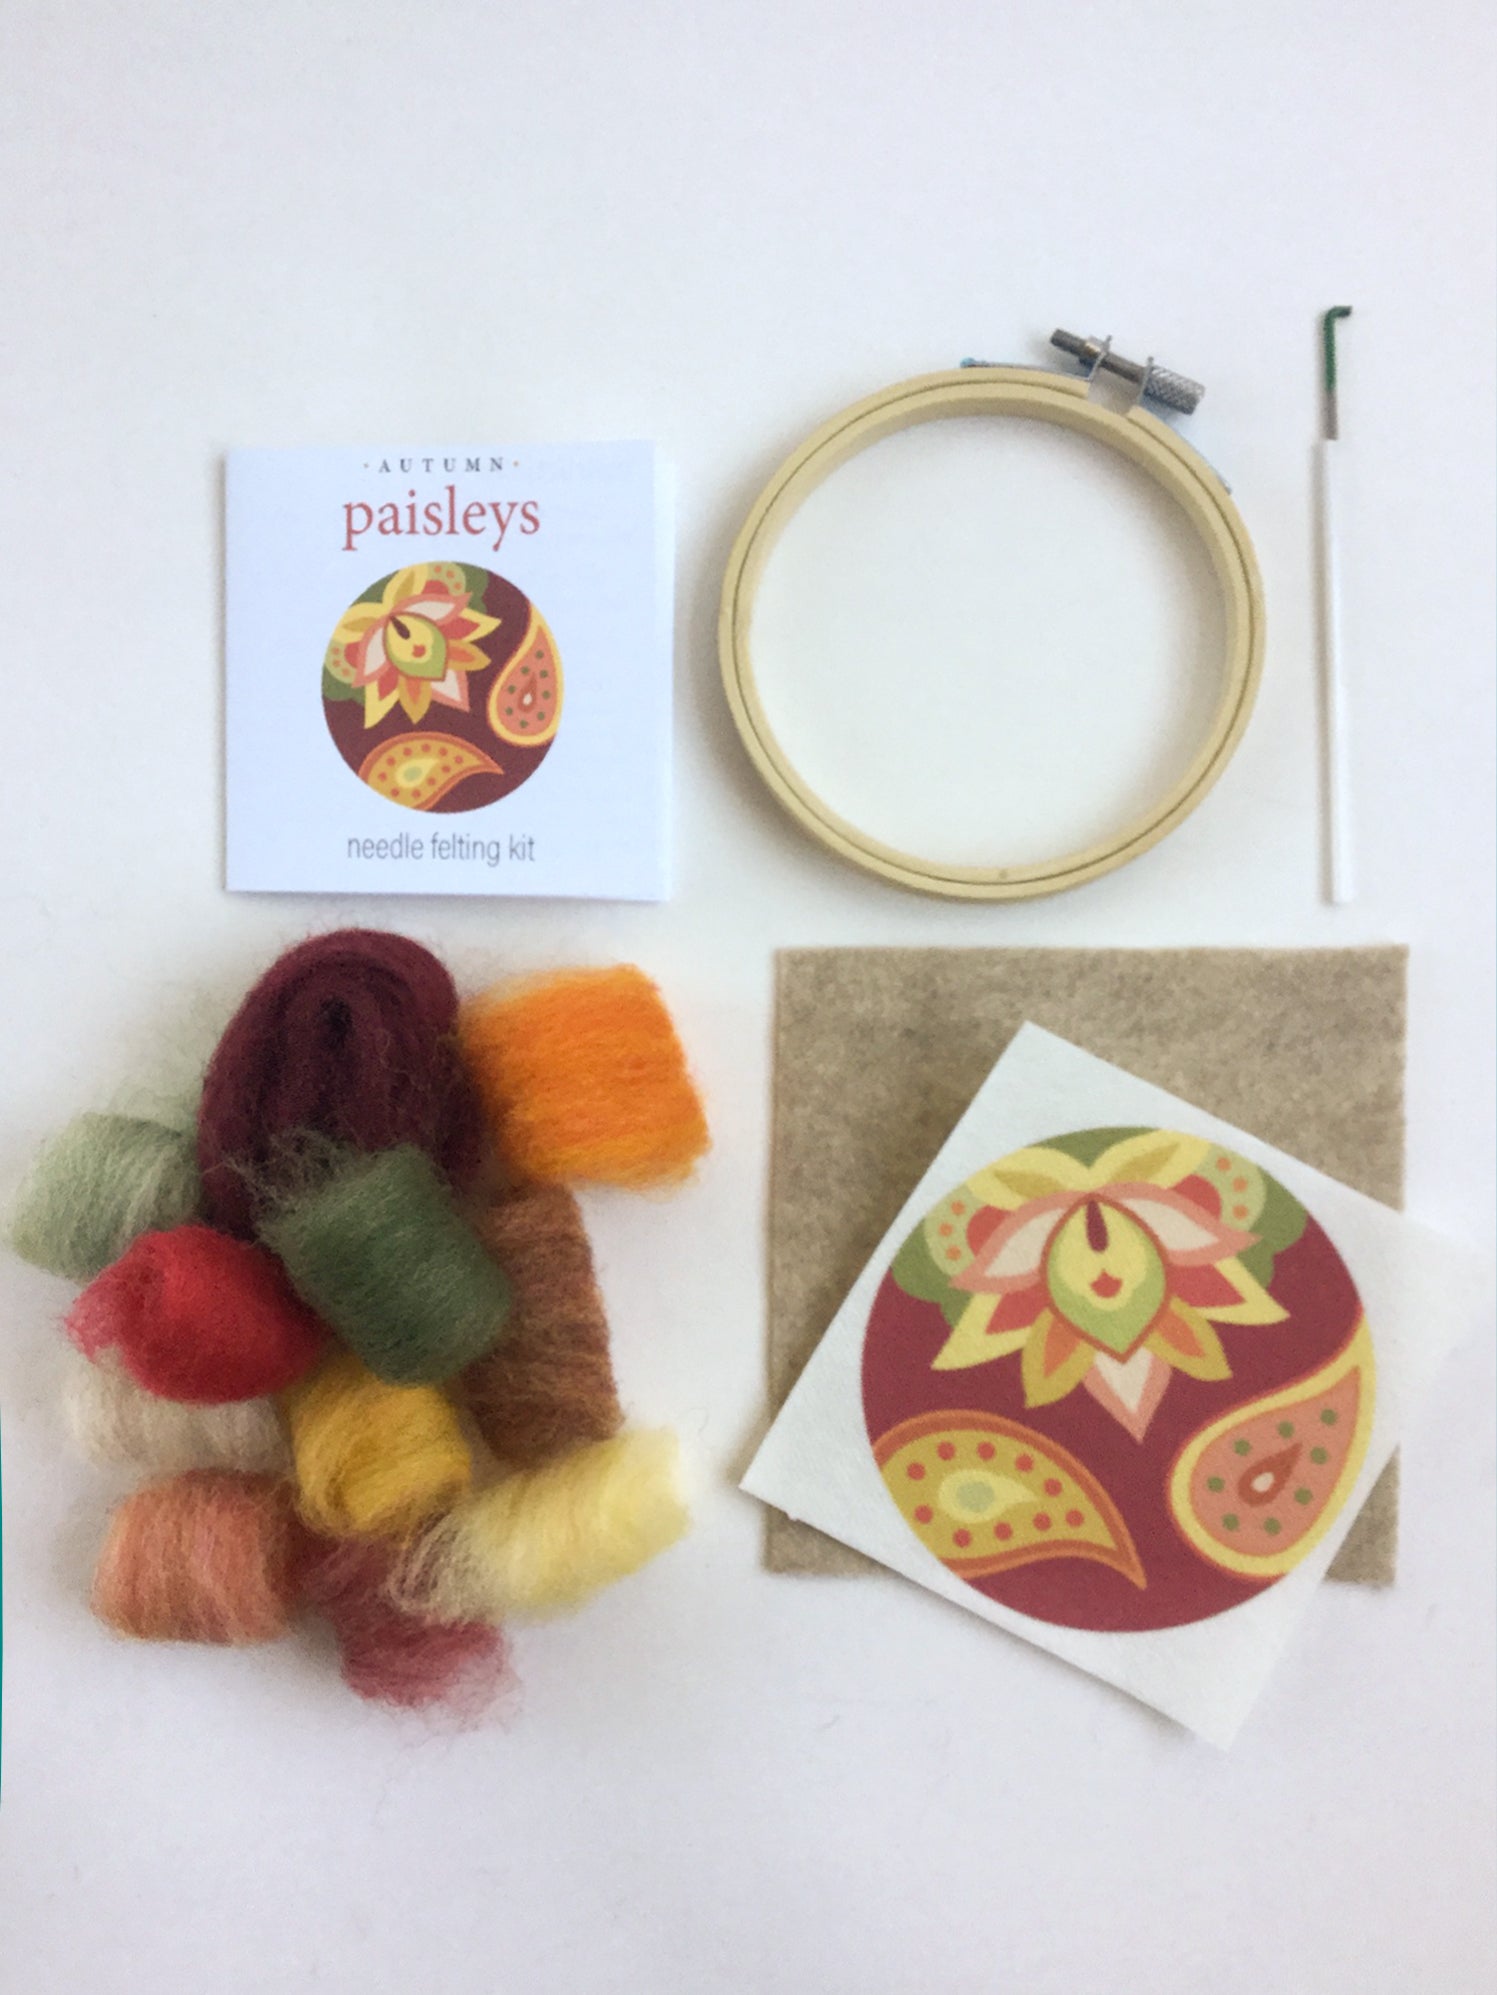 Paisleys Ornament Kit Contents - Claire Astra Studios